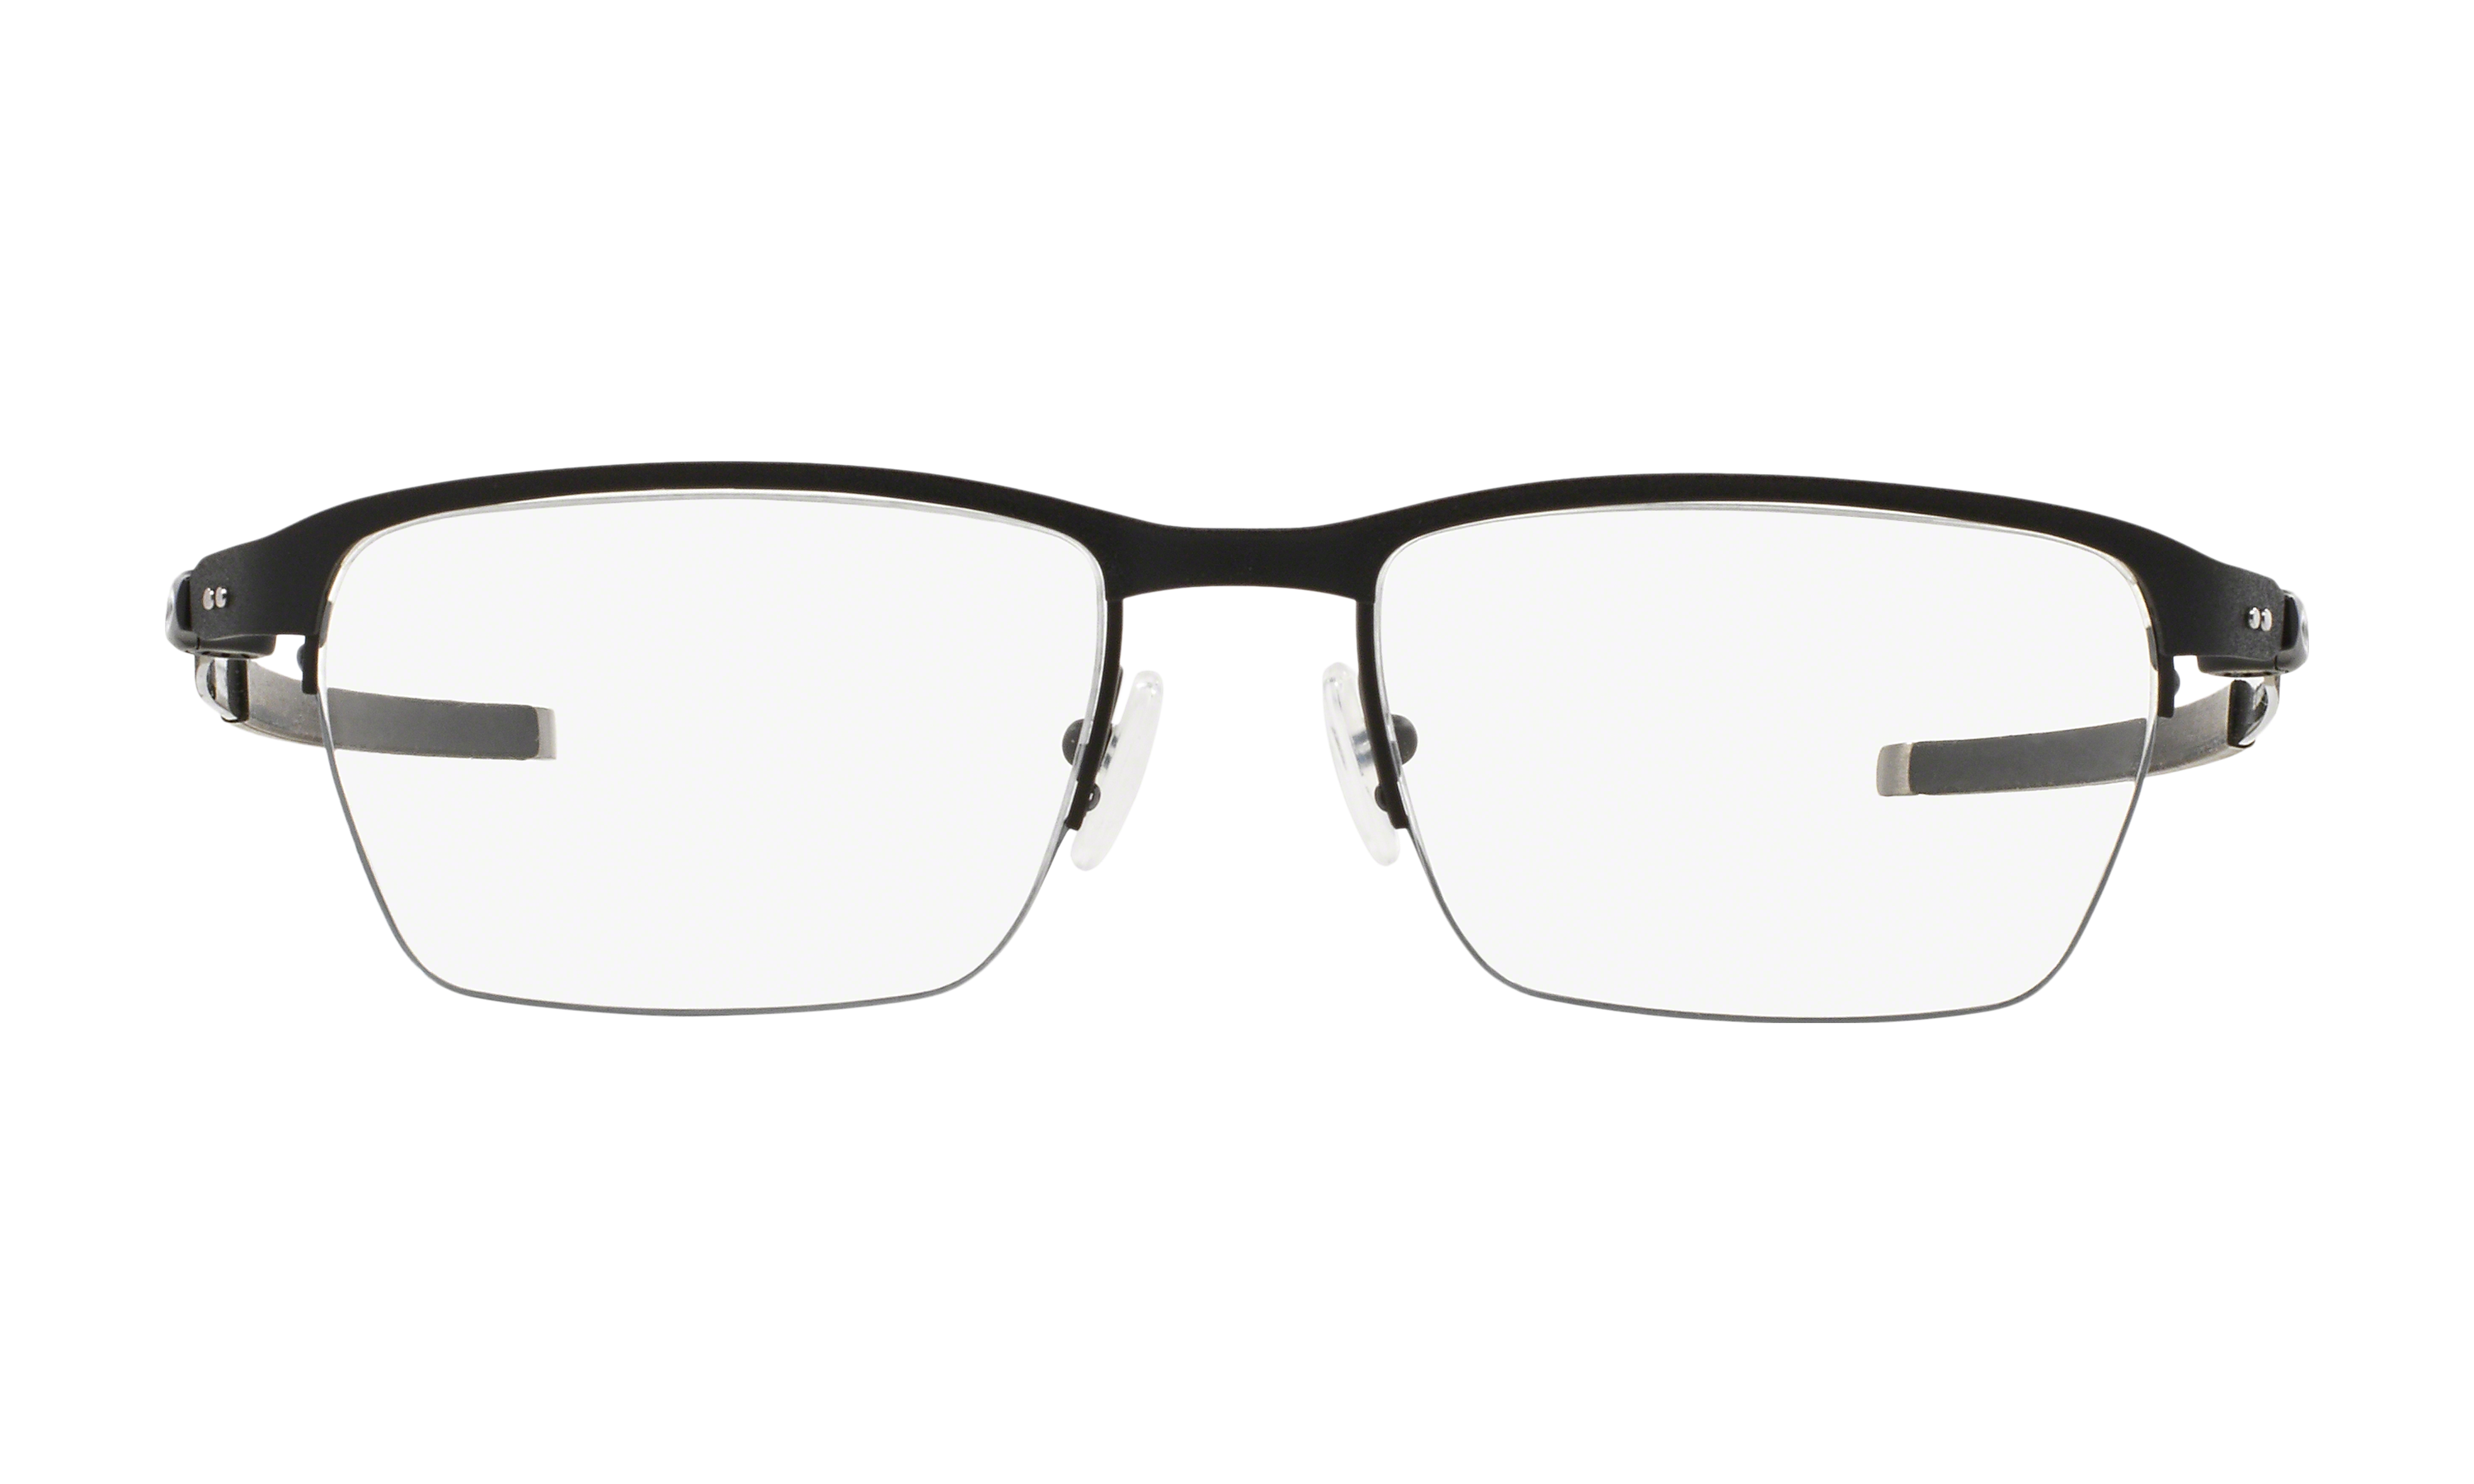 TinCup™ 0.5 Ti Powder Coal Eyeglasses 